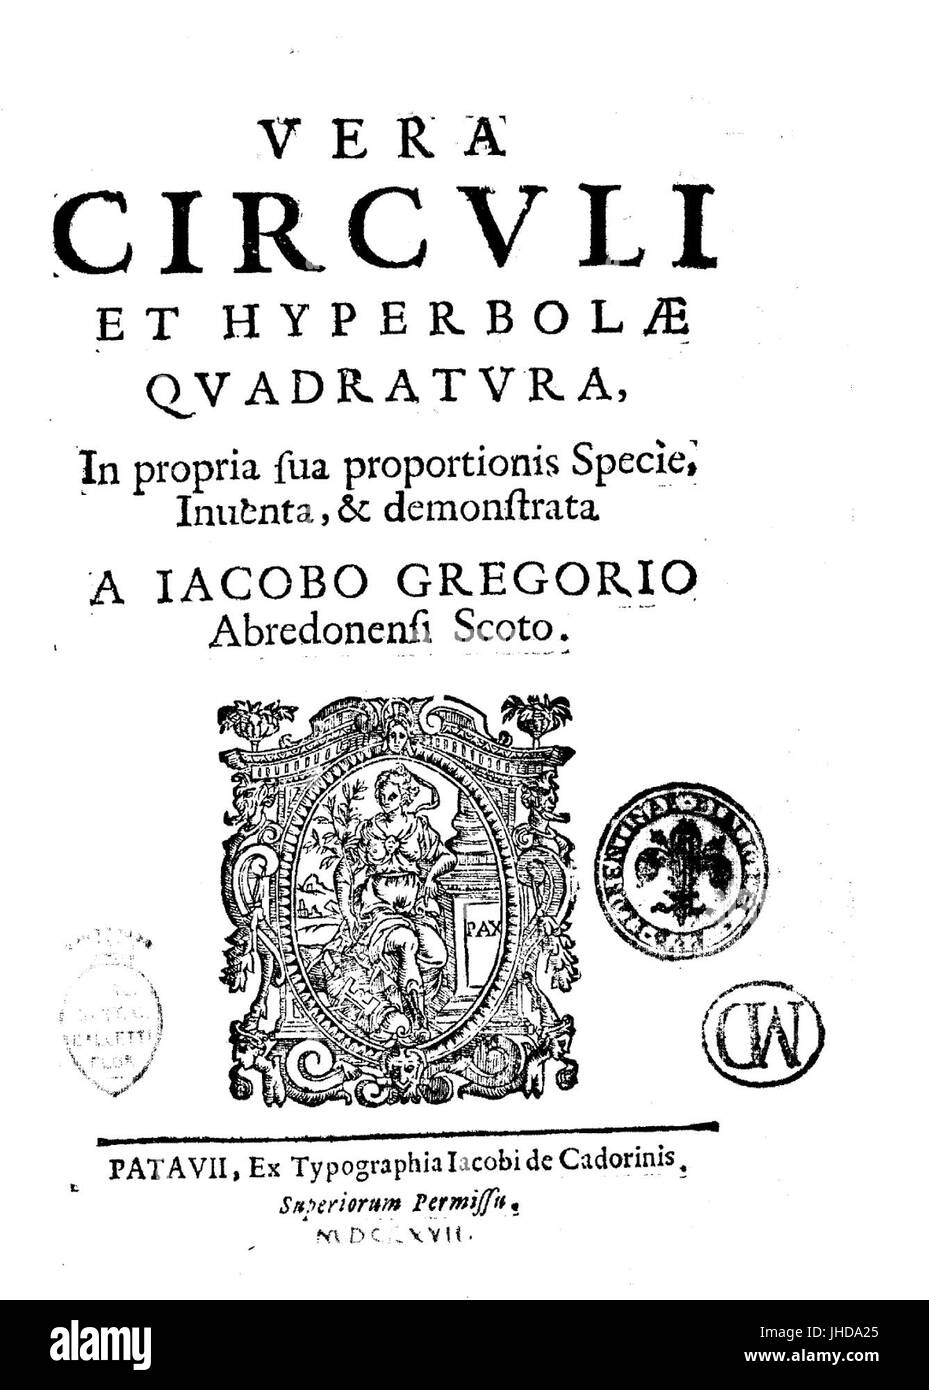 Gregory - Vera circuli et hyperbolae quadratura, in propria sua proportionis specie, inventa et demonstrata, 1667 - 878952 Stock Photo